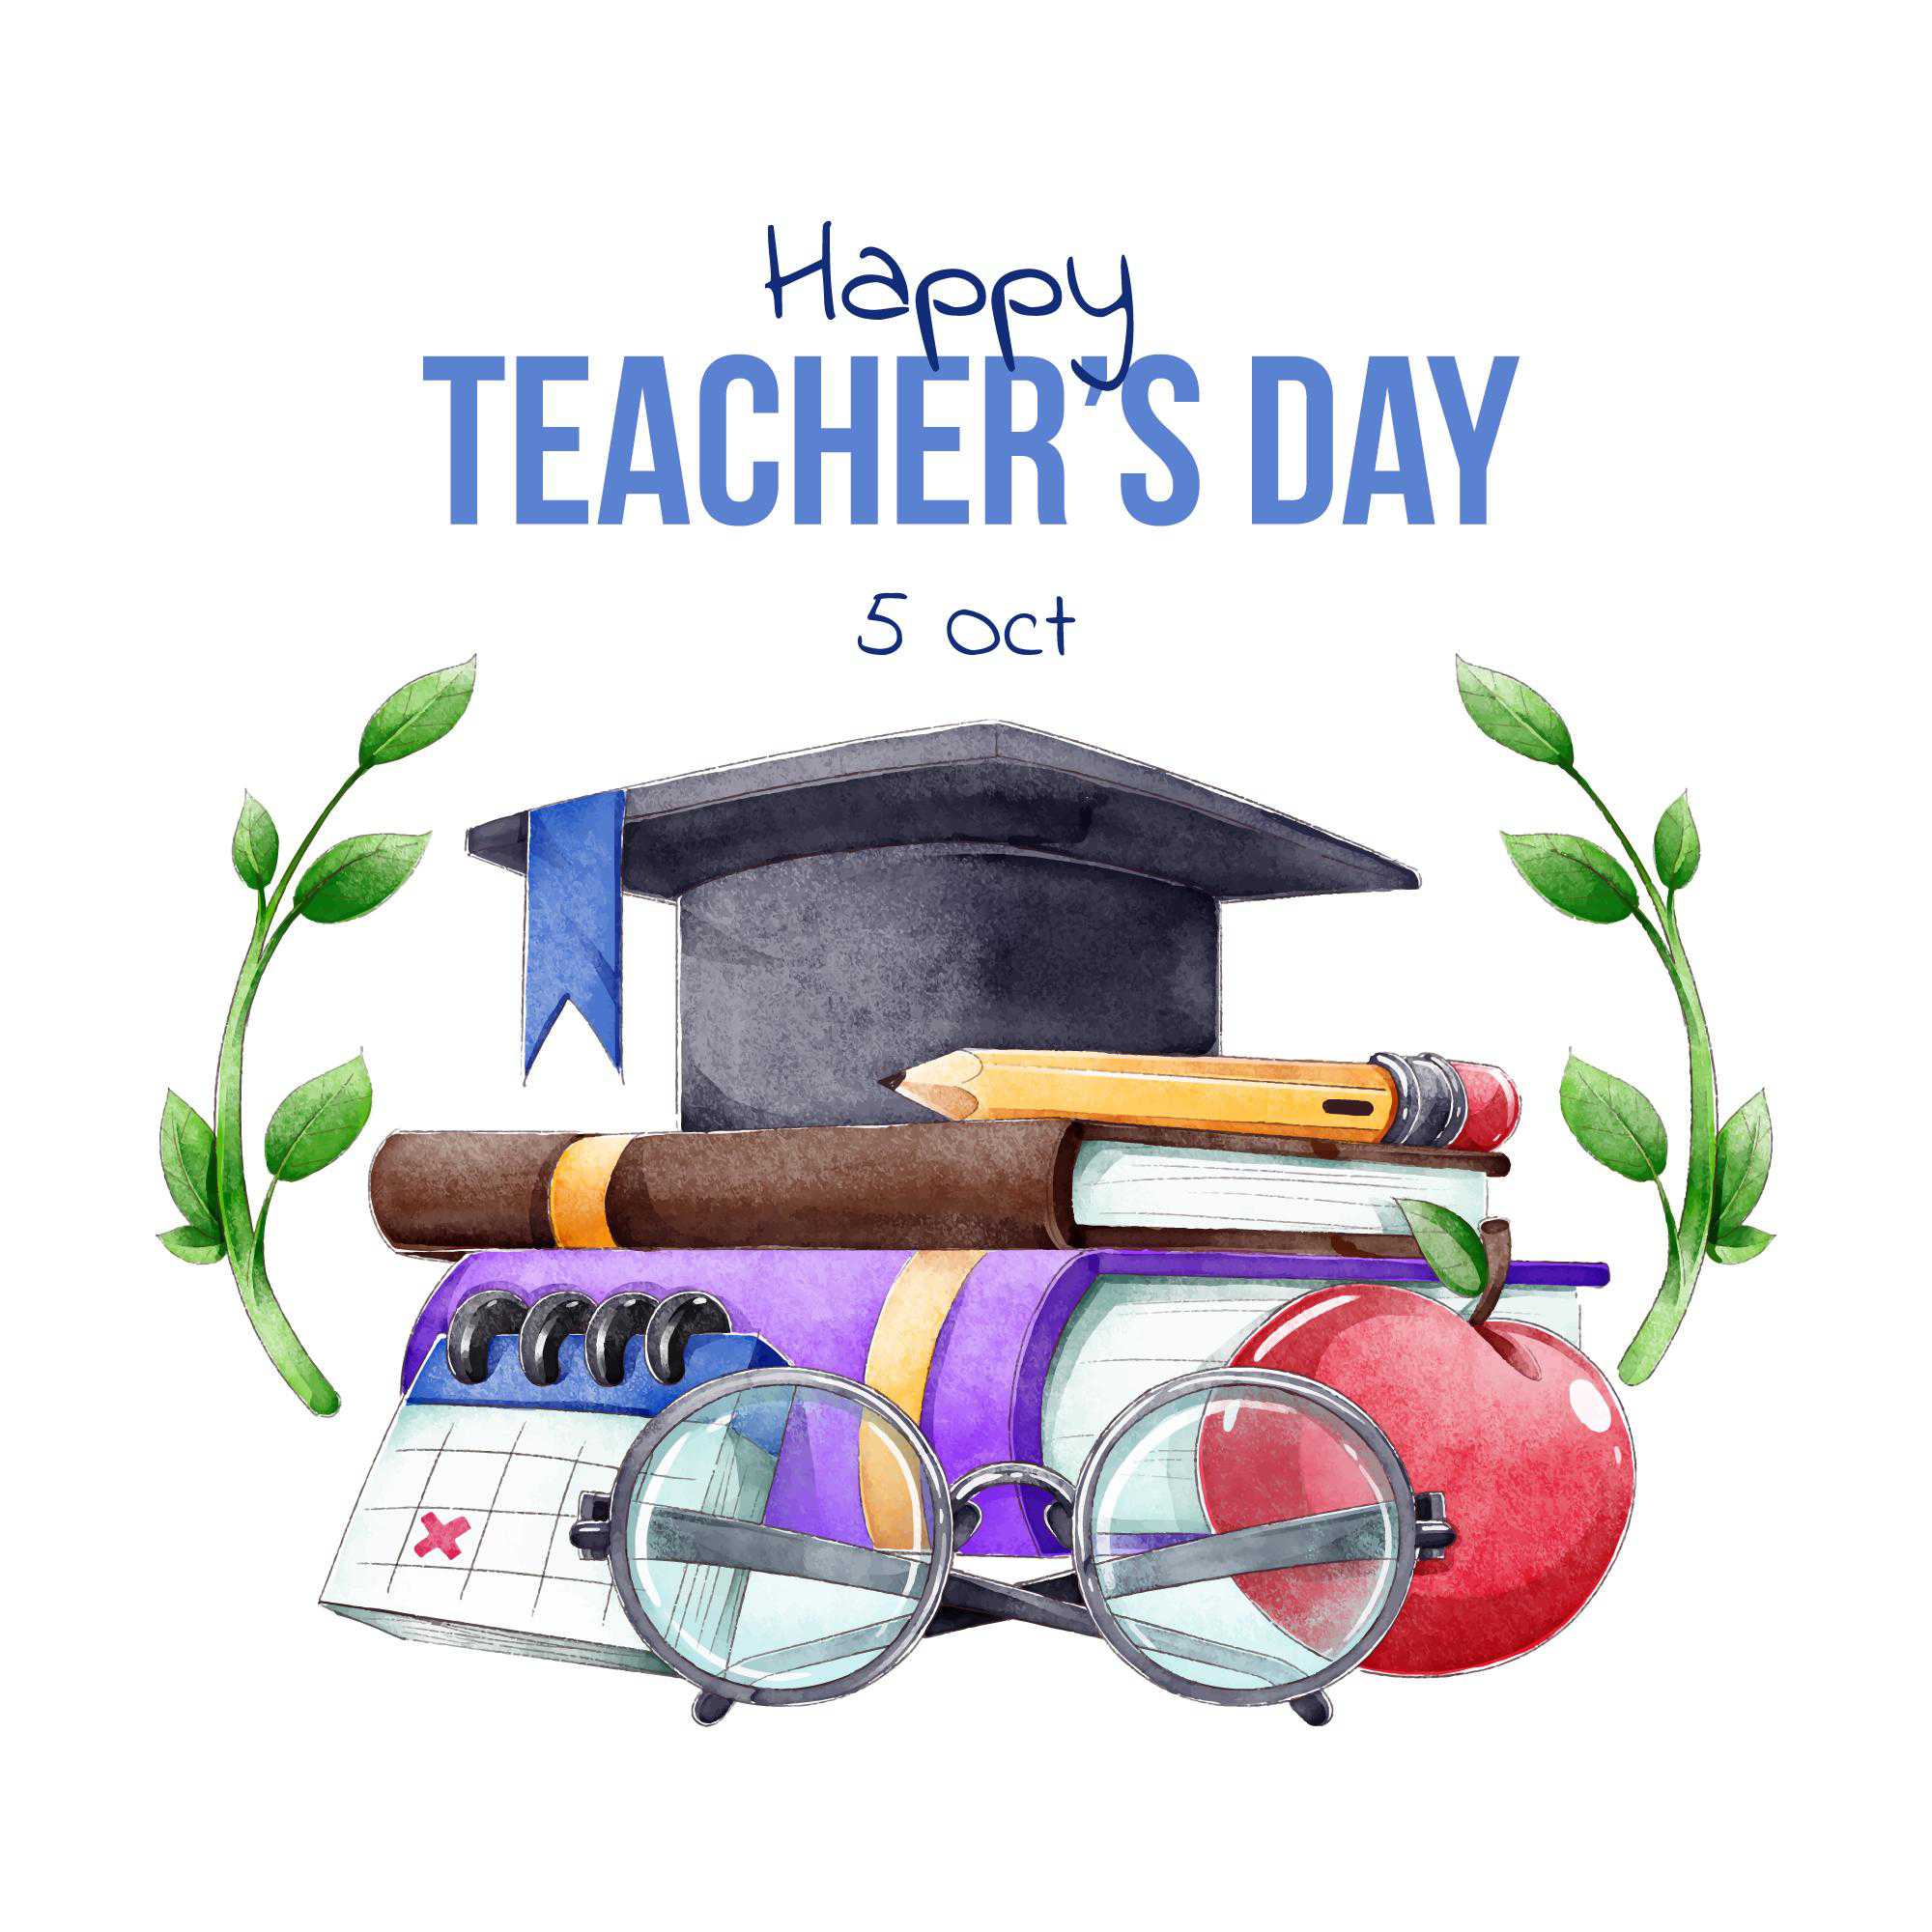 Happy Teacher's Day image download